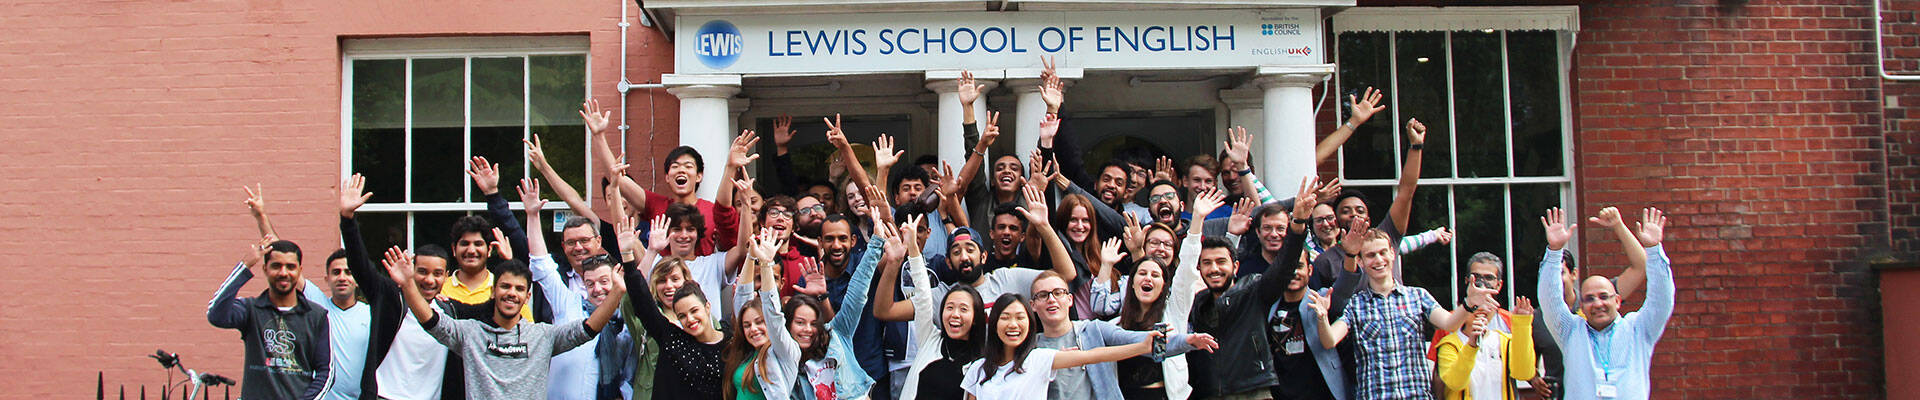 Lewis School of English görseli